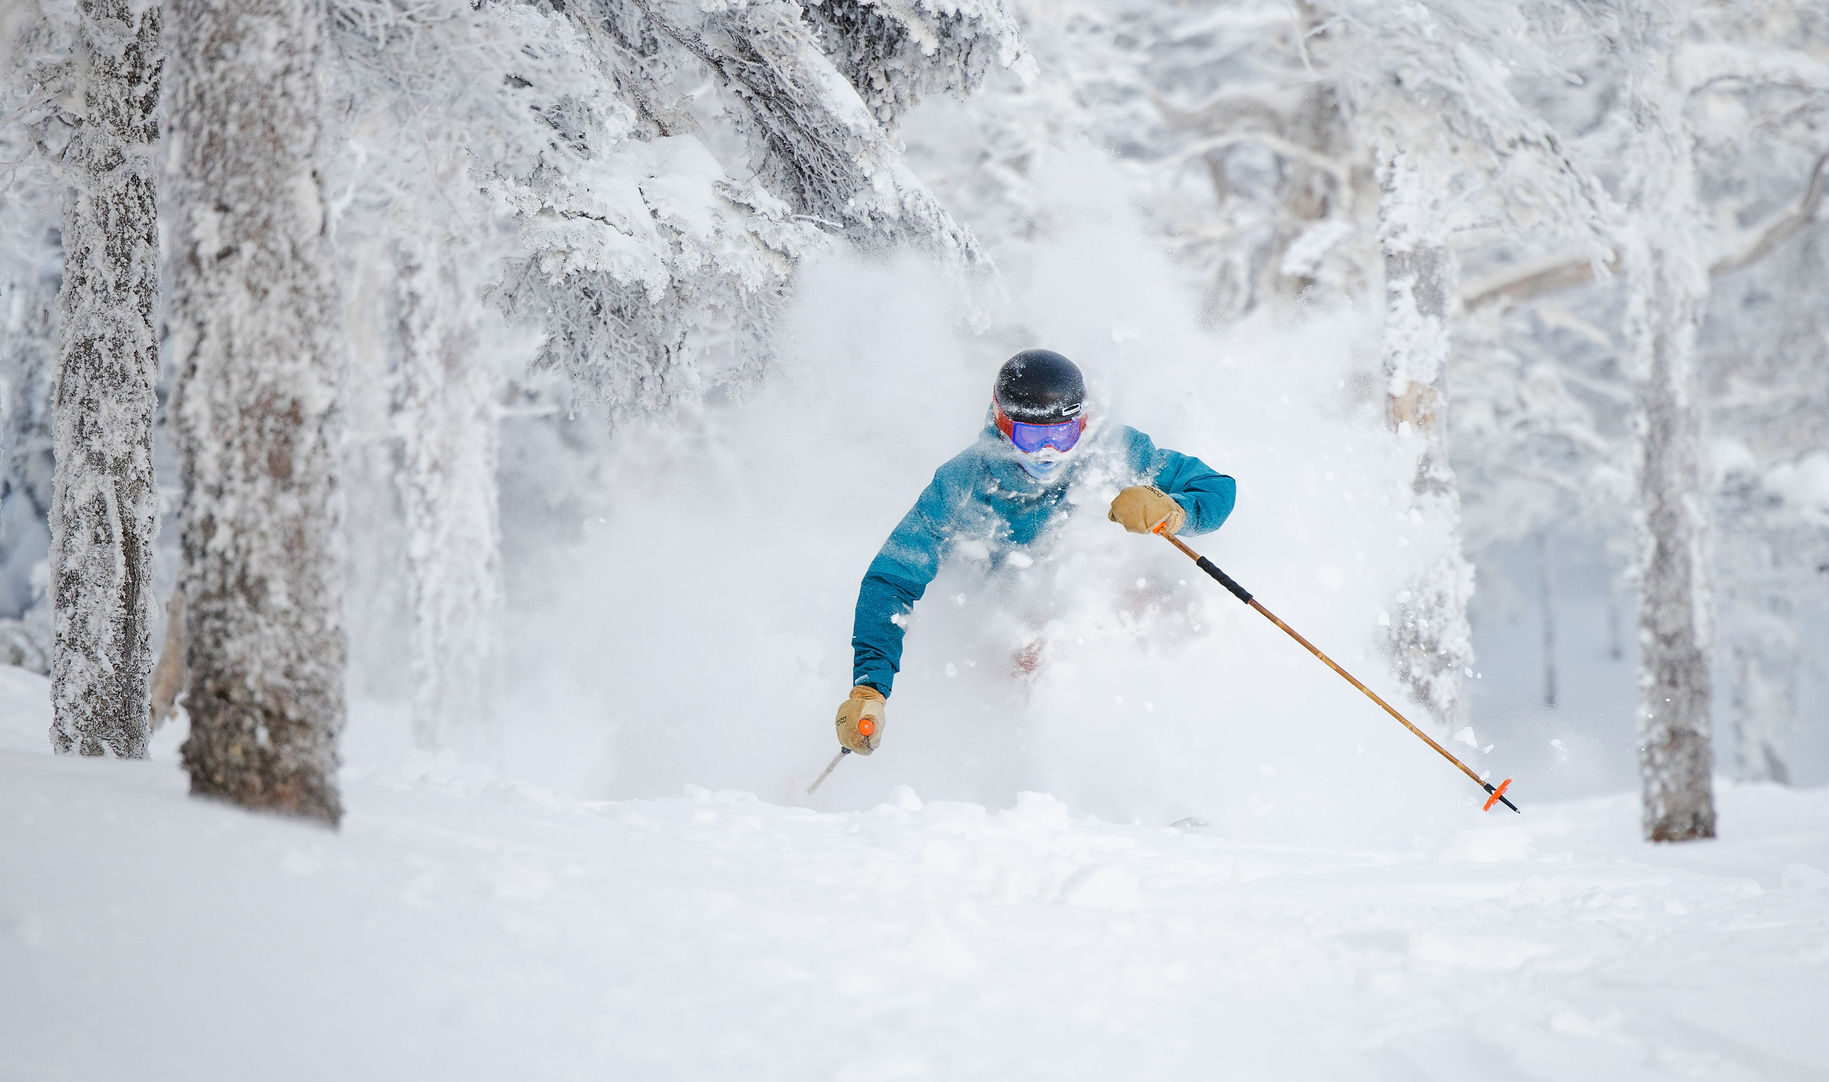 Skiing in deep powder